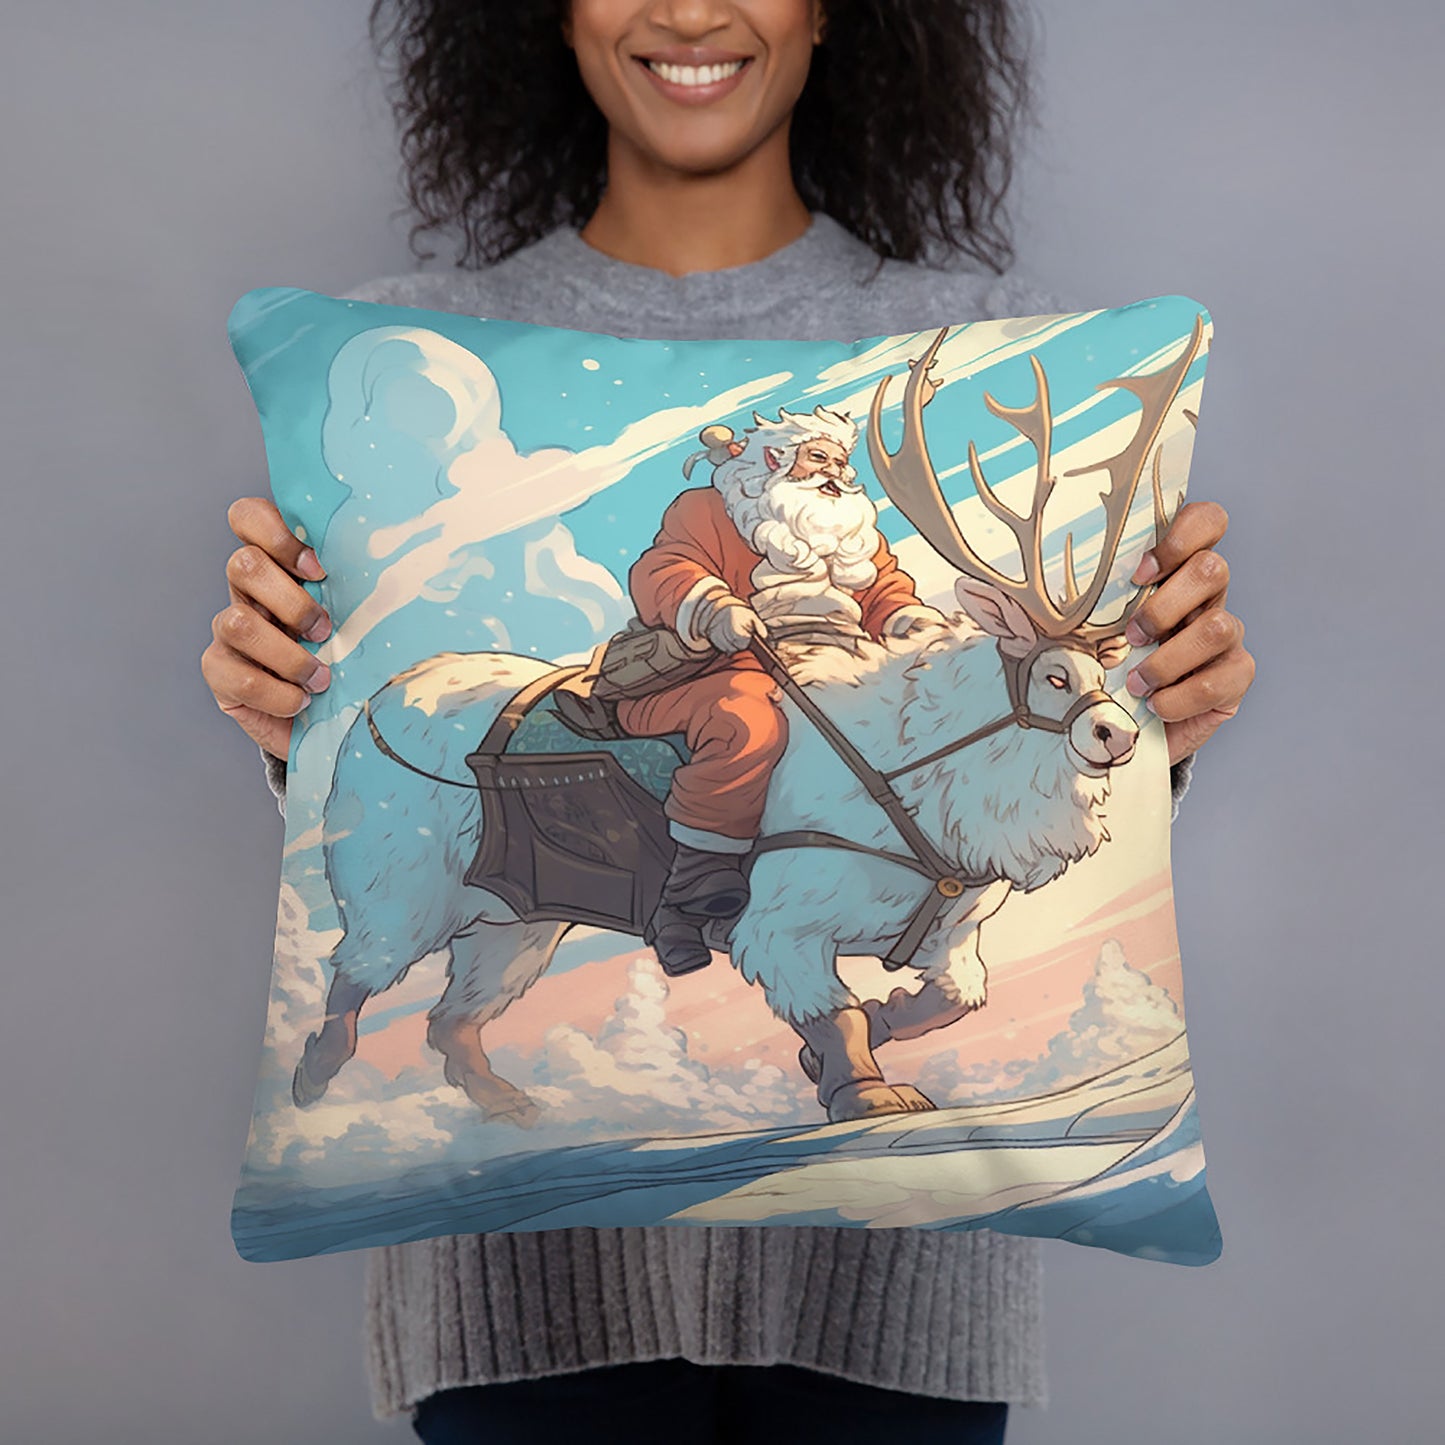 Christmas Throw Pillow Santa's Morning Ride Polyester Decorative Cushion 18x18